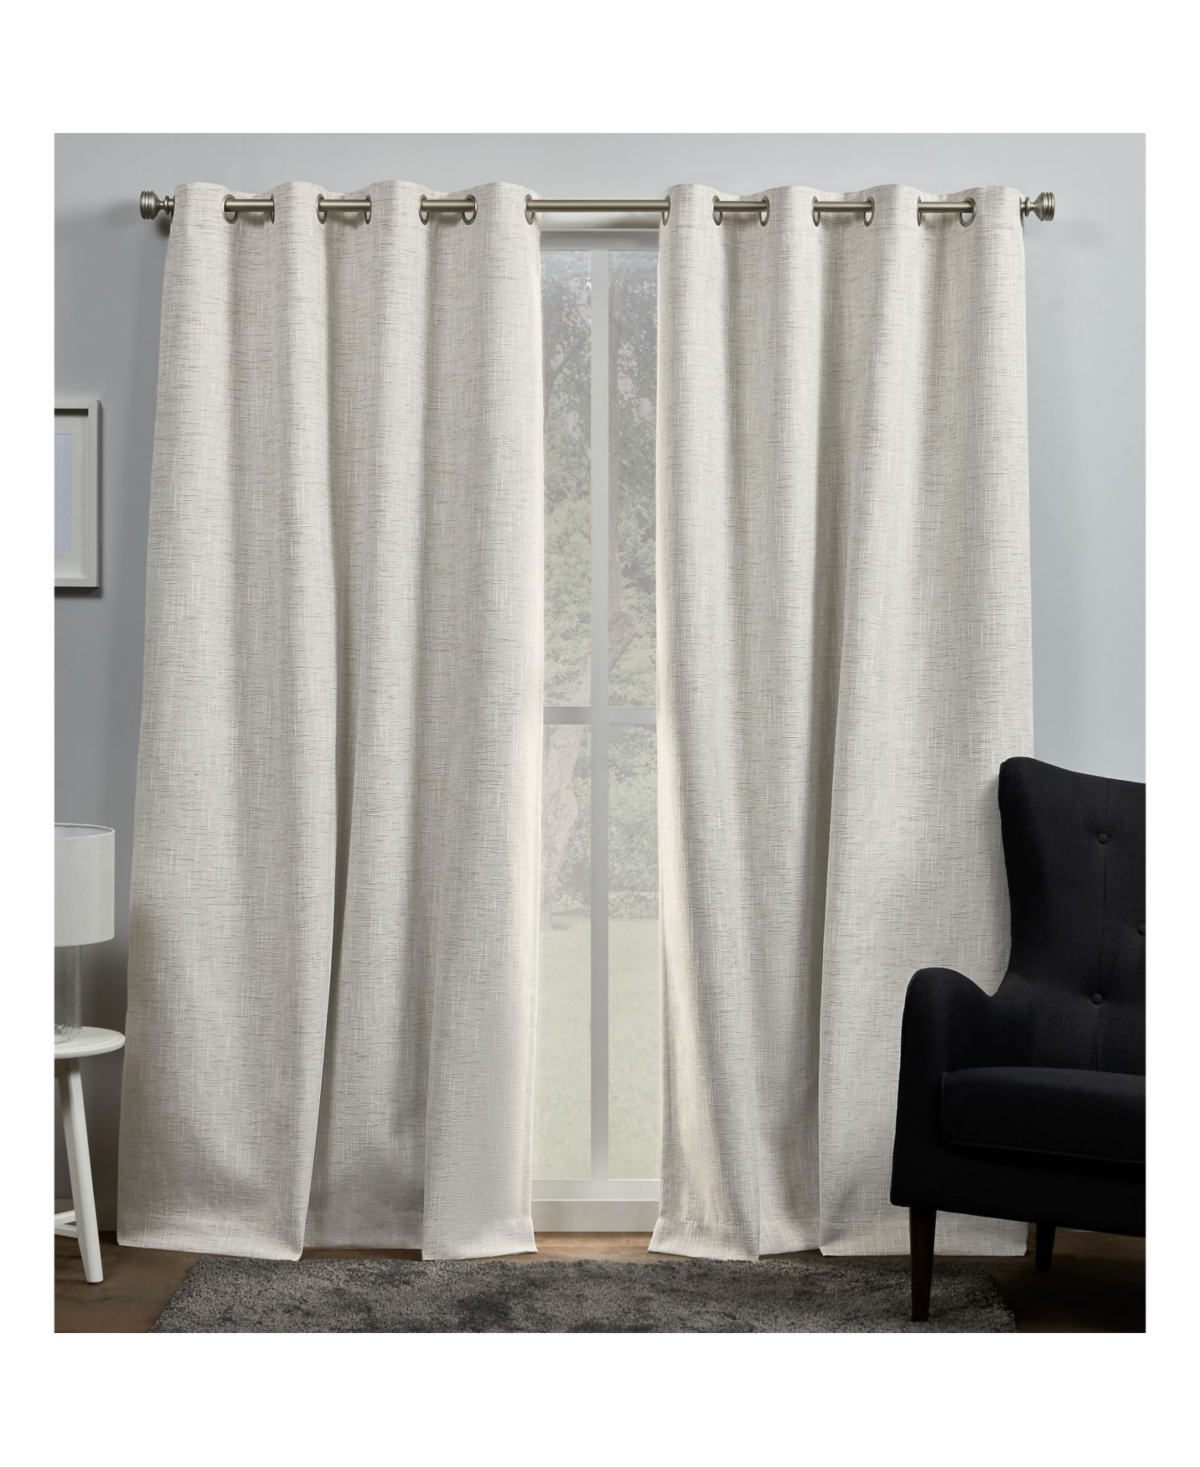 Curtains Burke Blackout Grommet Top Curtain Panel Pair, 52" x 96", Set of 2 - Gray